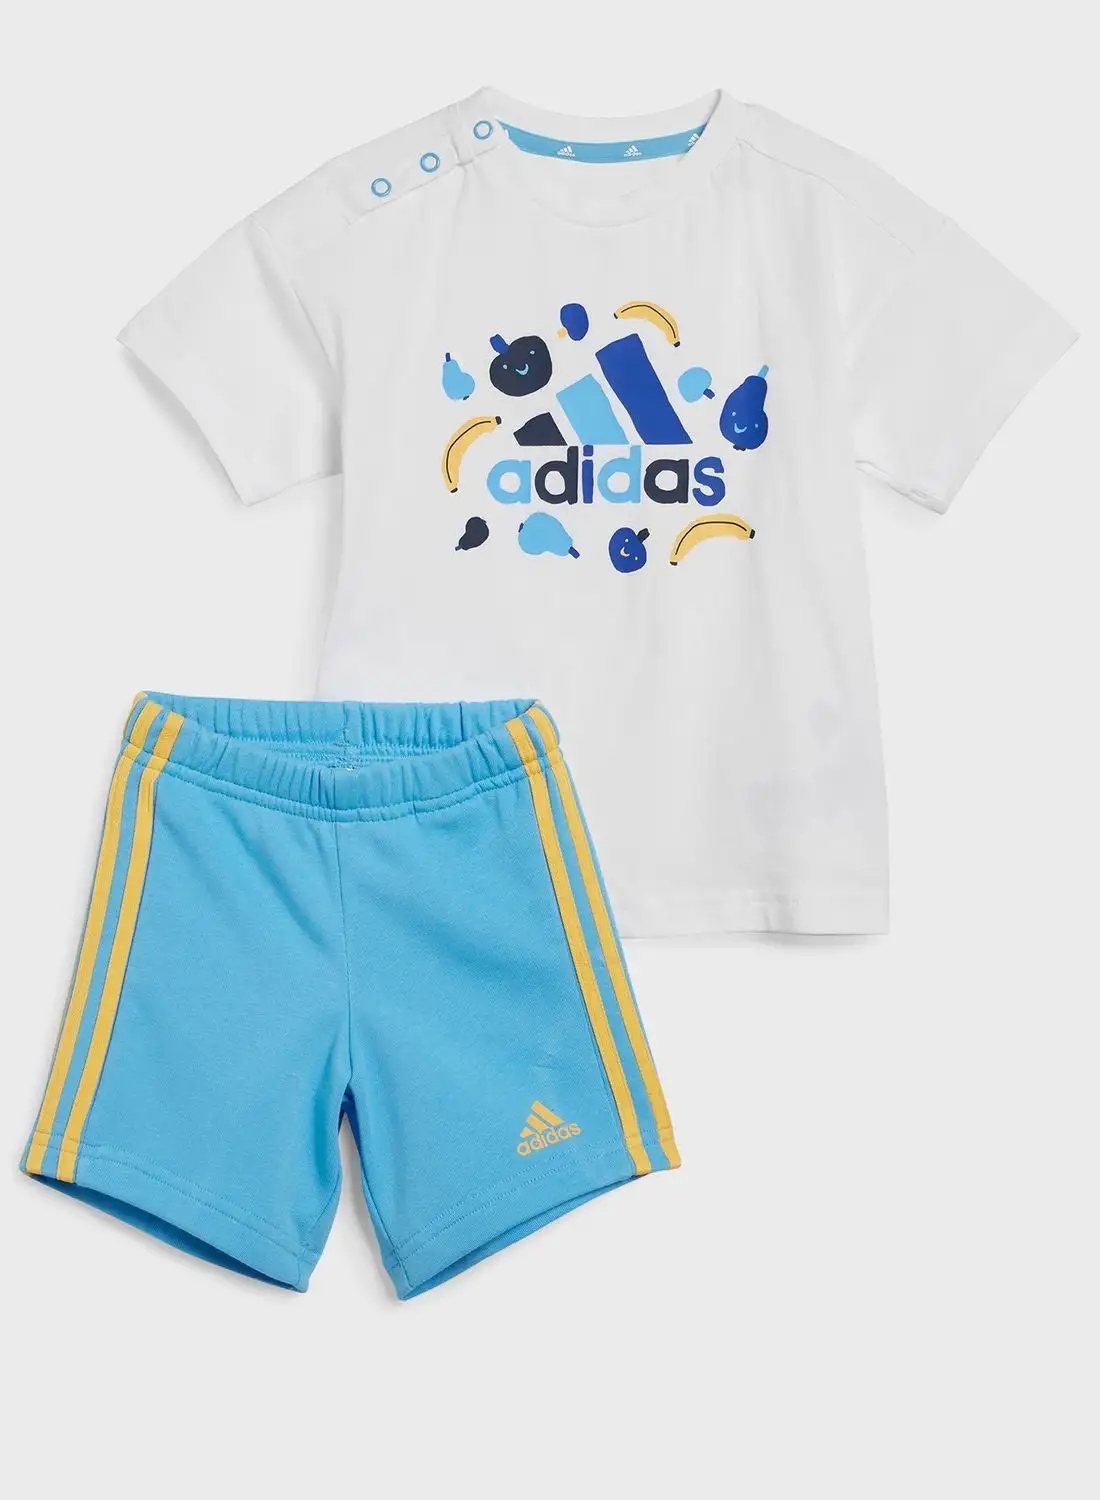 Adidas Infants Fruit Graphic T-Shirt